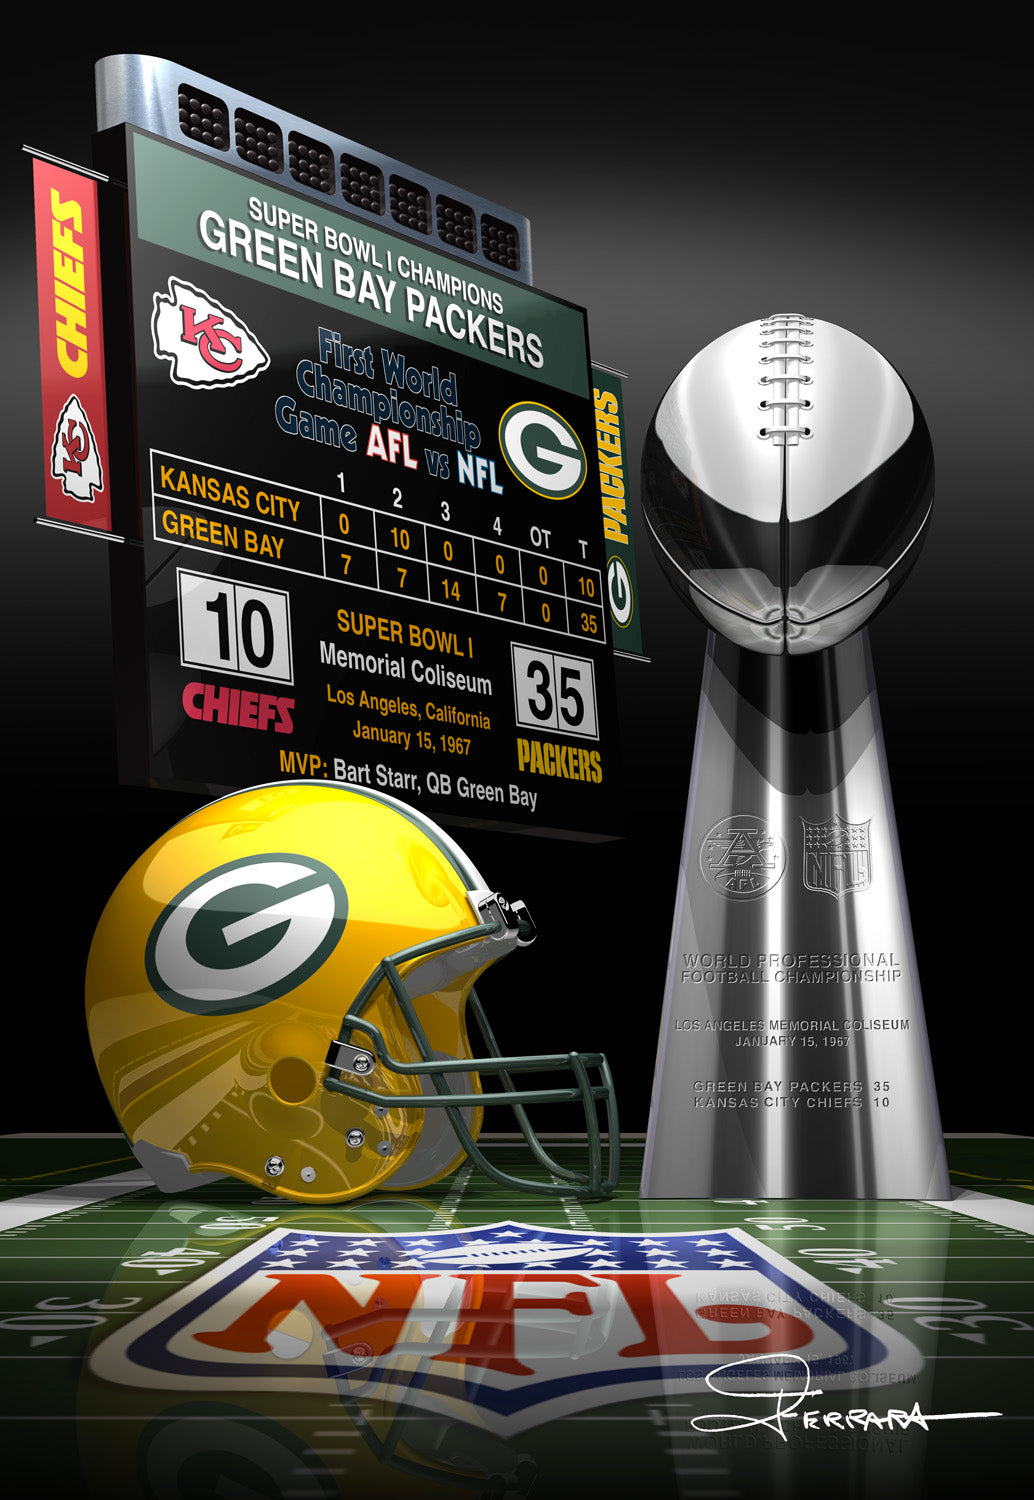 Green Bay Packers, Super Bowl I Champions